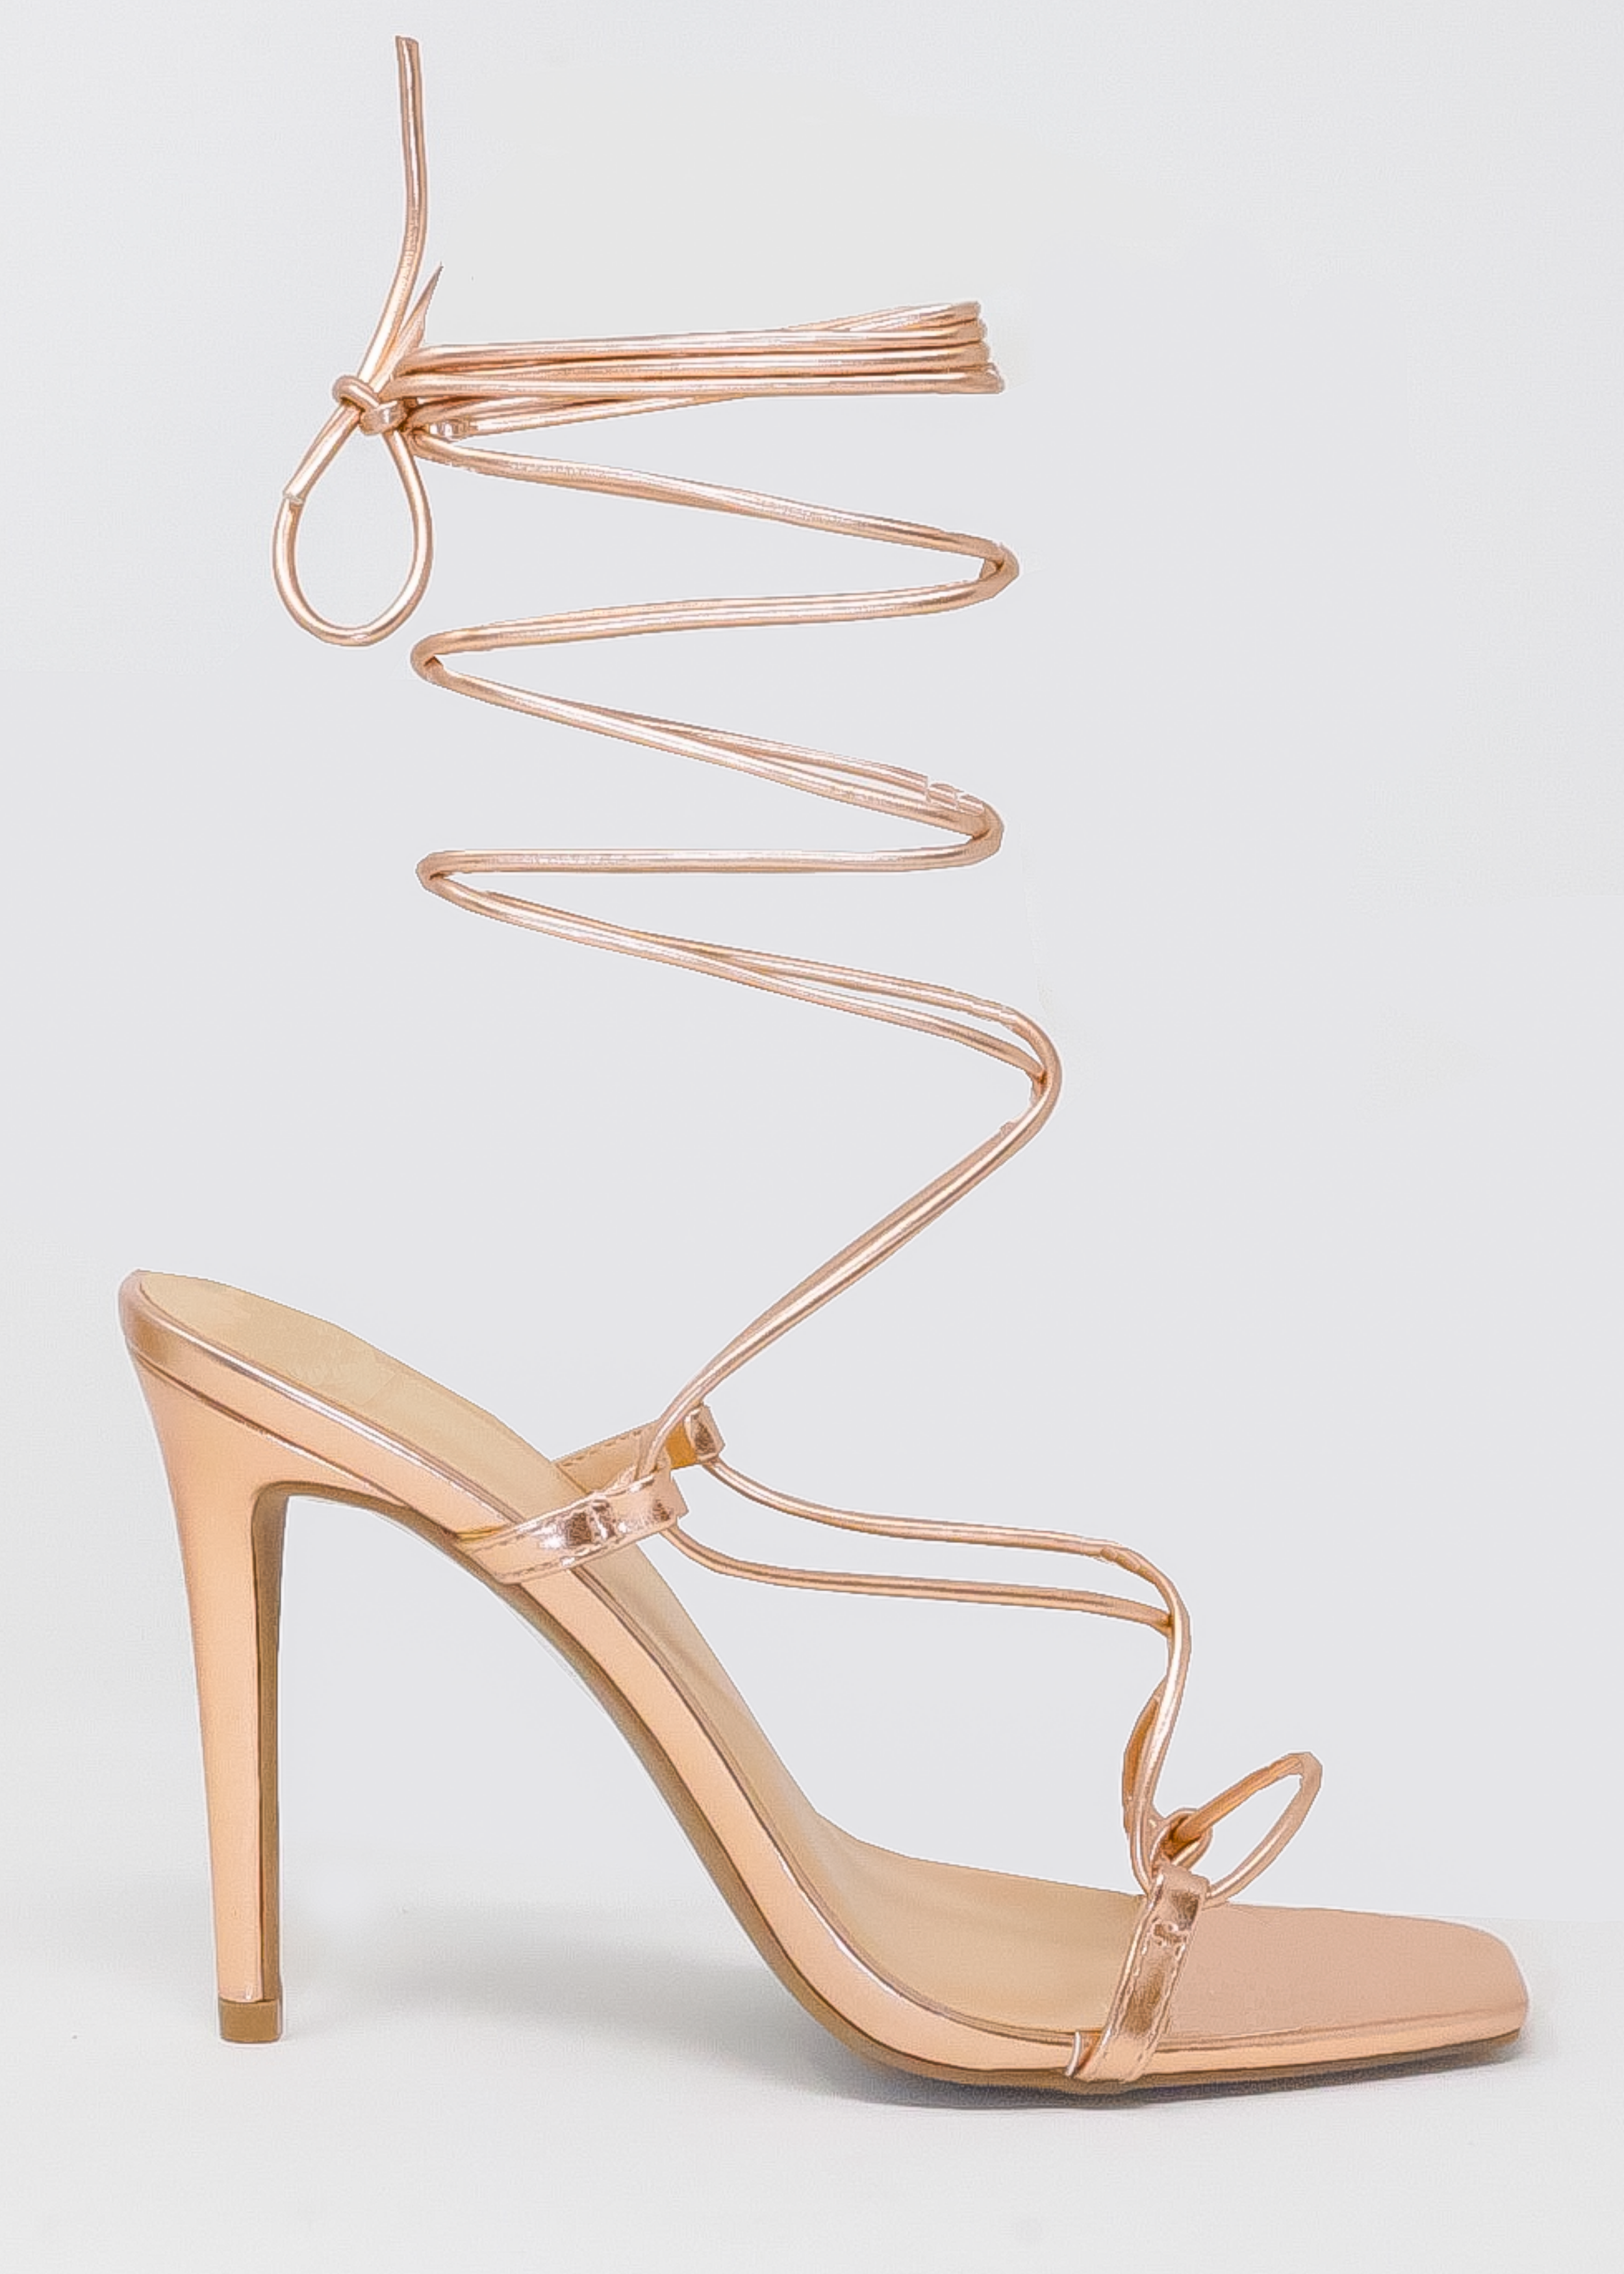 Elizabeth Rose Gold Double Bow Heels | Bow heels, Heels, Rose gold shoes  heels